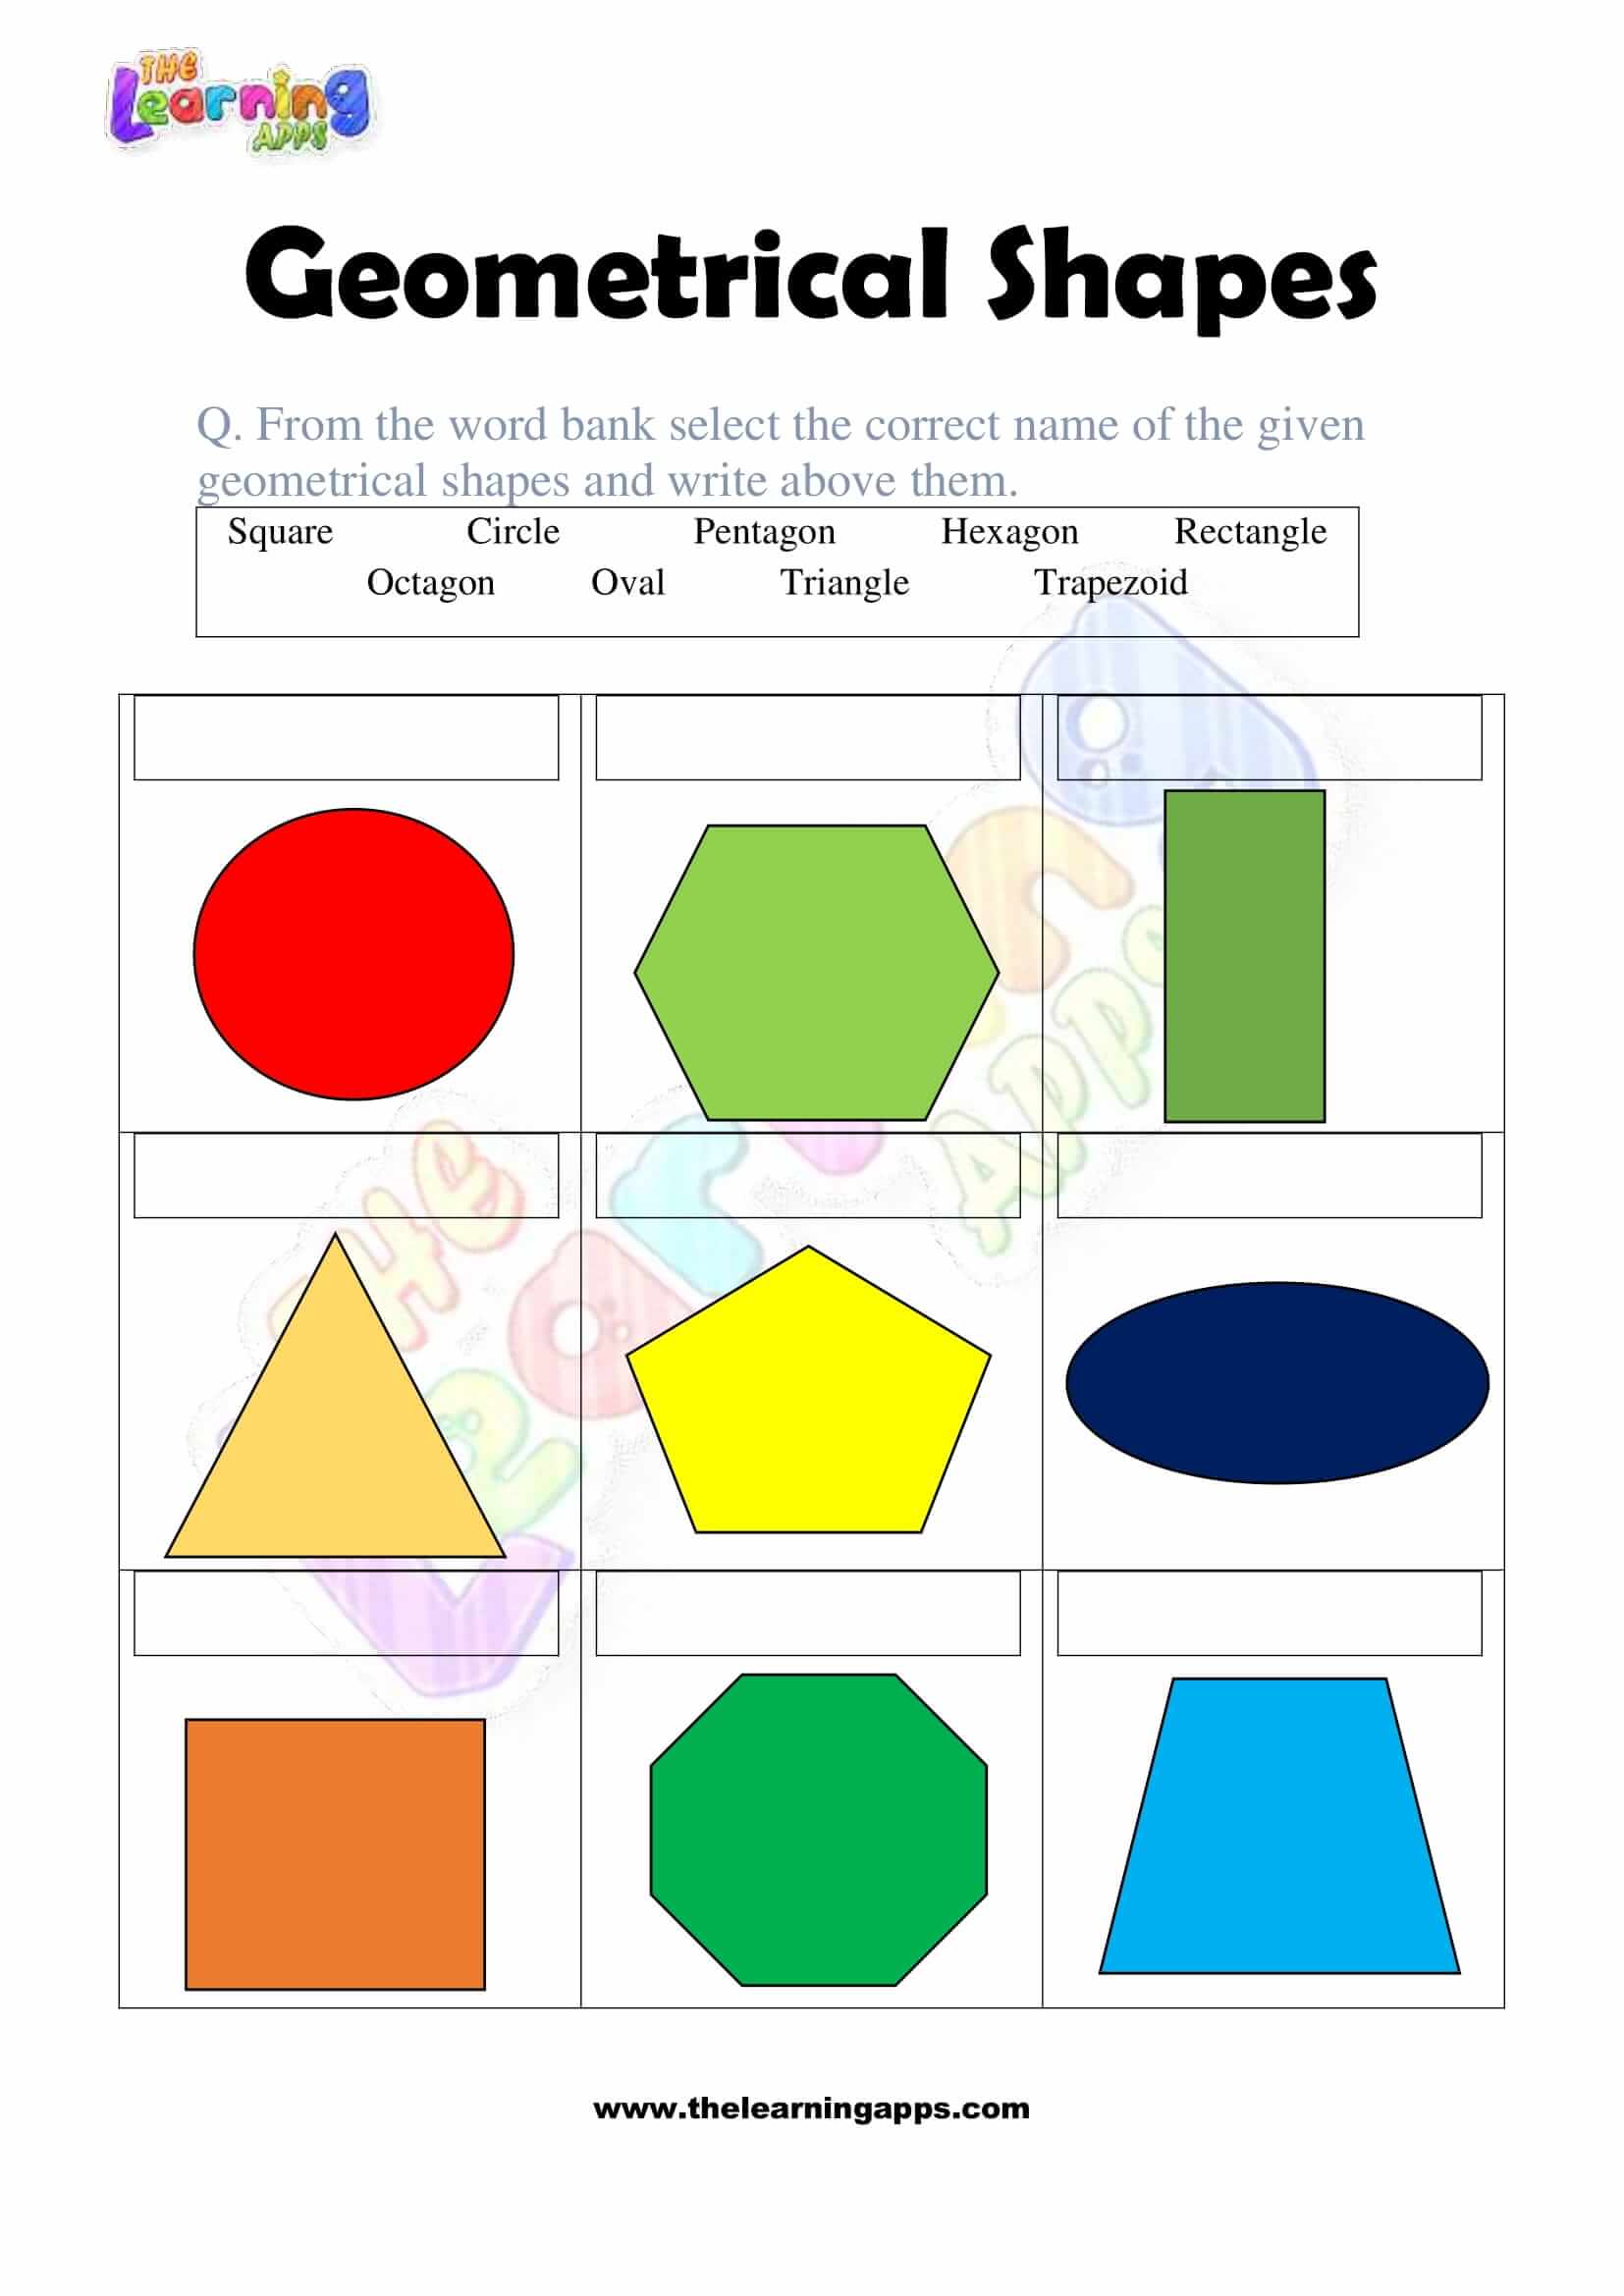 Geometrical Shapes - Grade 2 - Activity 1